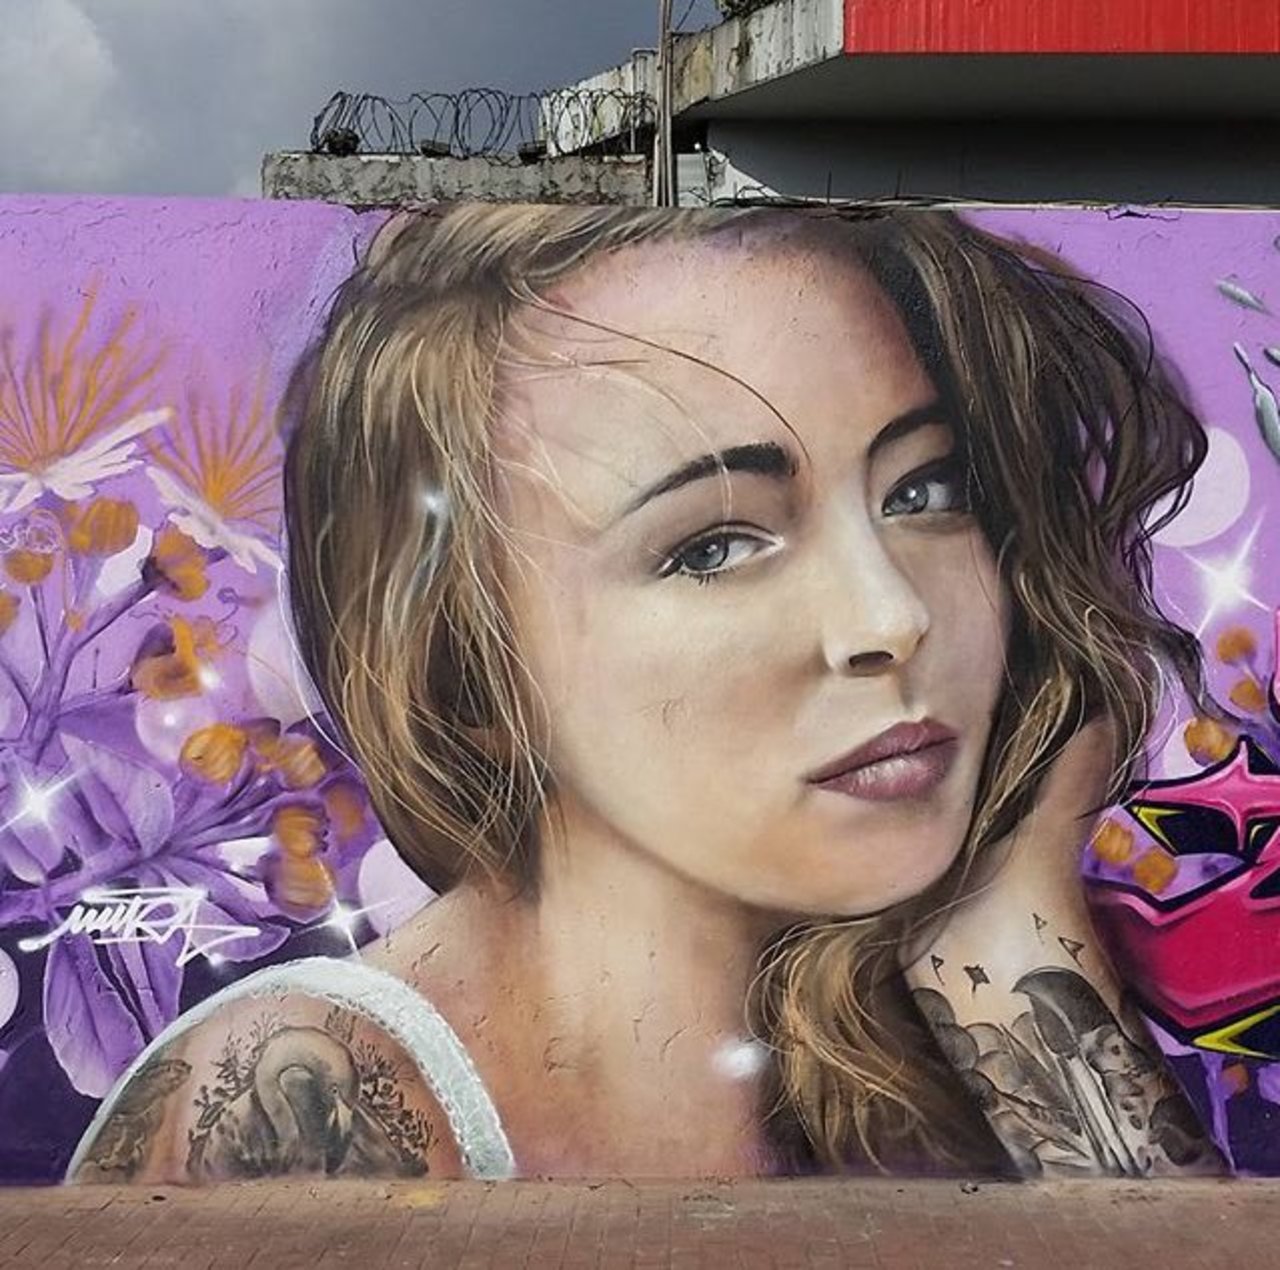 New Street Art by Mantarea 

#art #graffiti #mural #streetart https://t.co/y7bnqRE8Sr